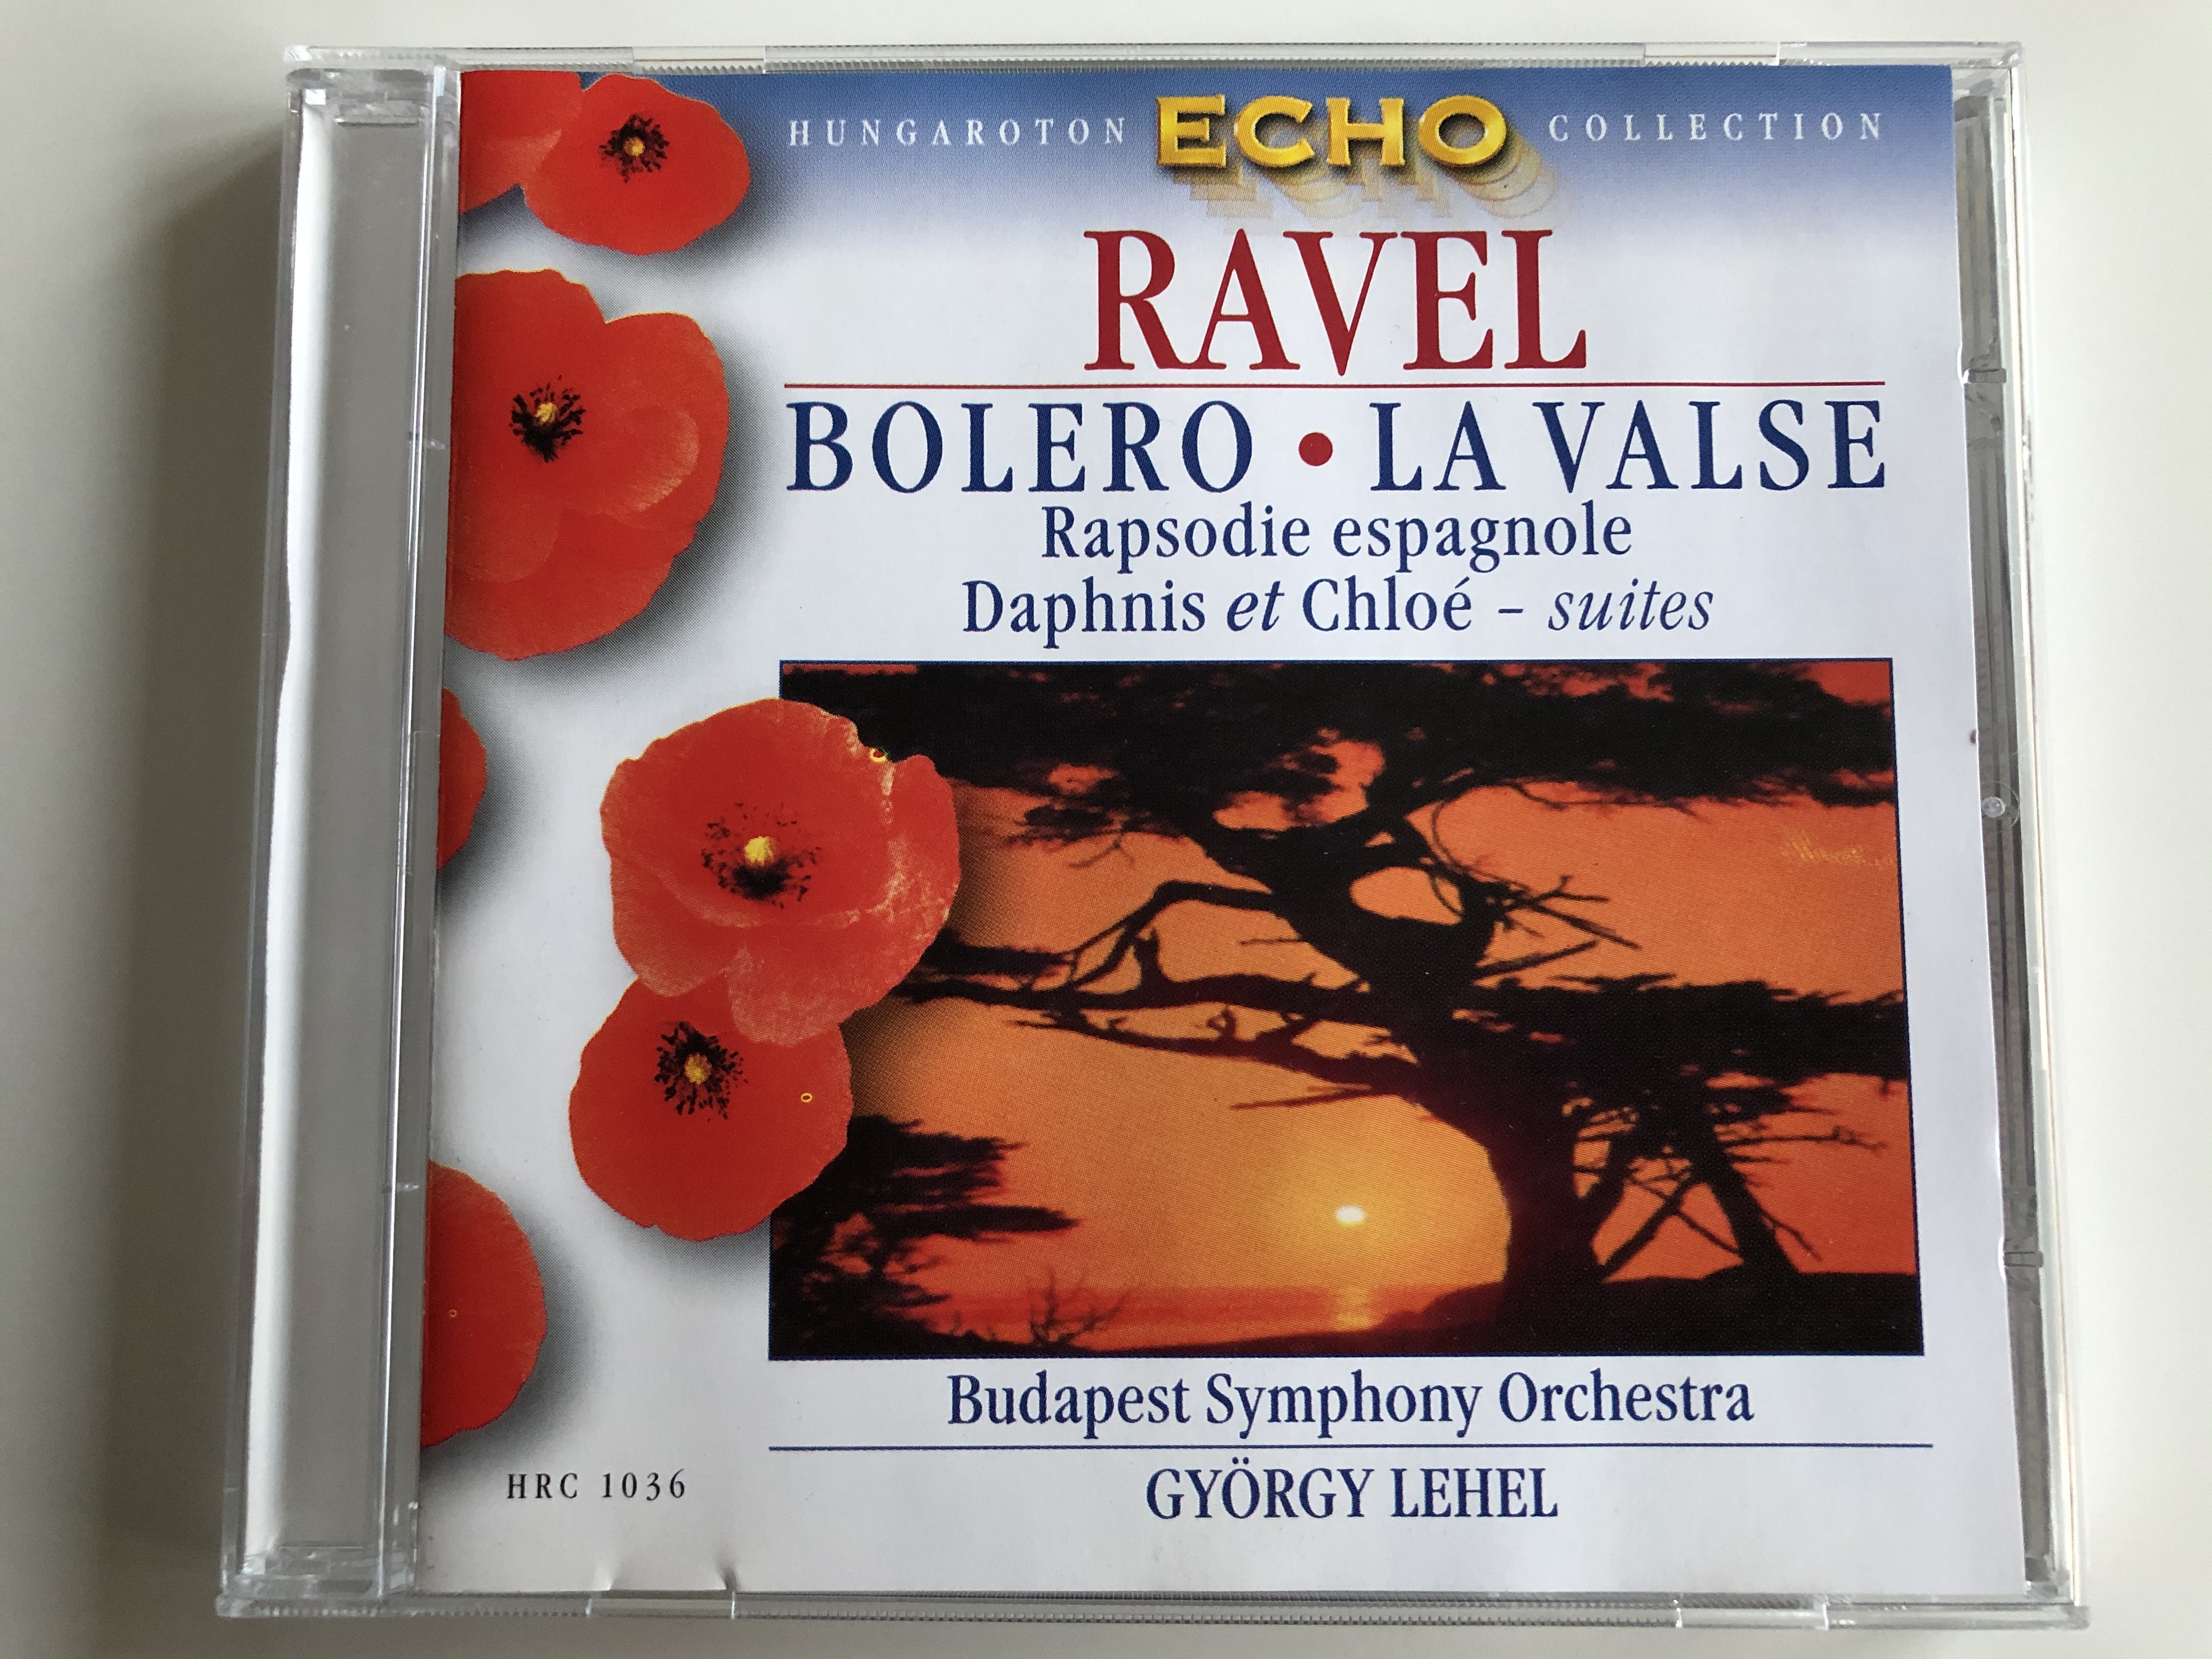 ravel-bolero-la-valse-rapsodie-espagnole-dephnis-et-chlo-suites-budapest-symphony-orchestra-gy-rgy-lehel-hungaroton-classic-audio-cd-1999-stereo-hrc-1036-1-.jpg